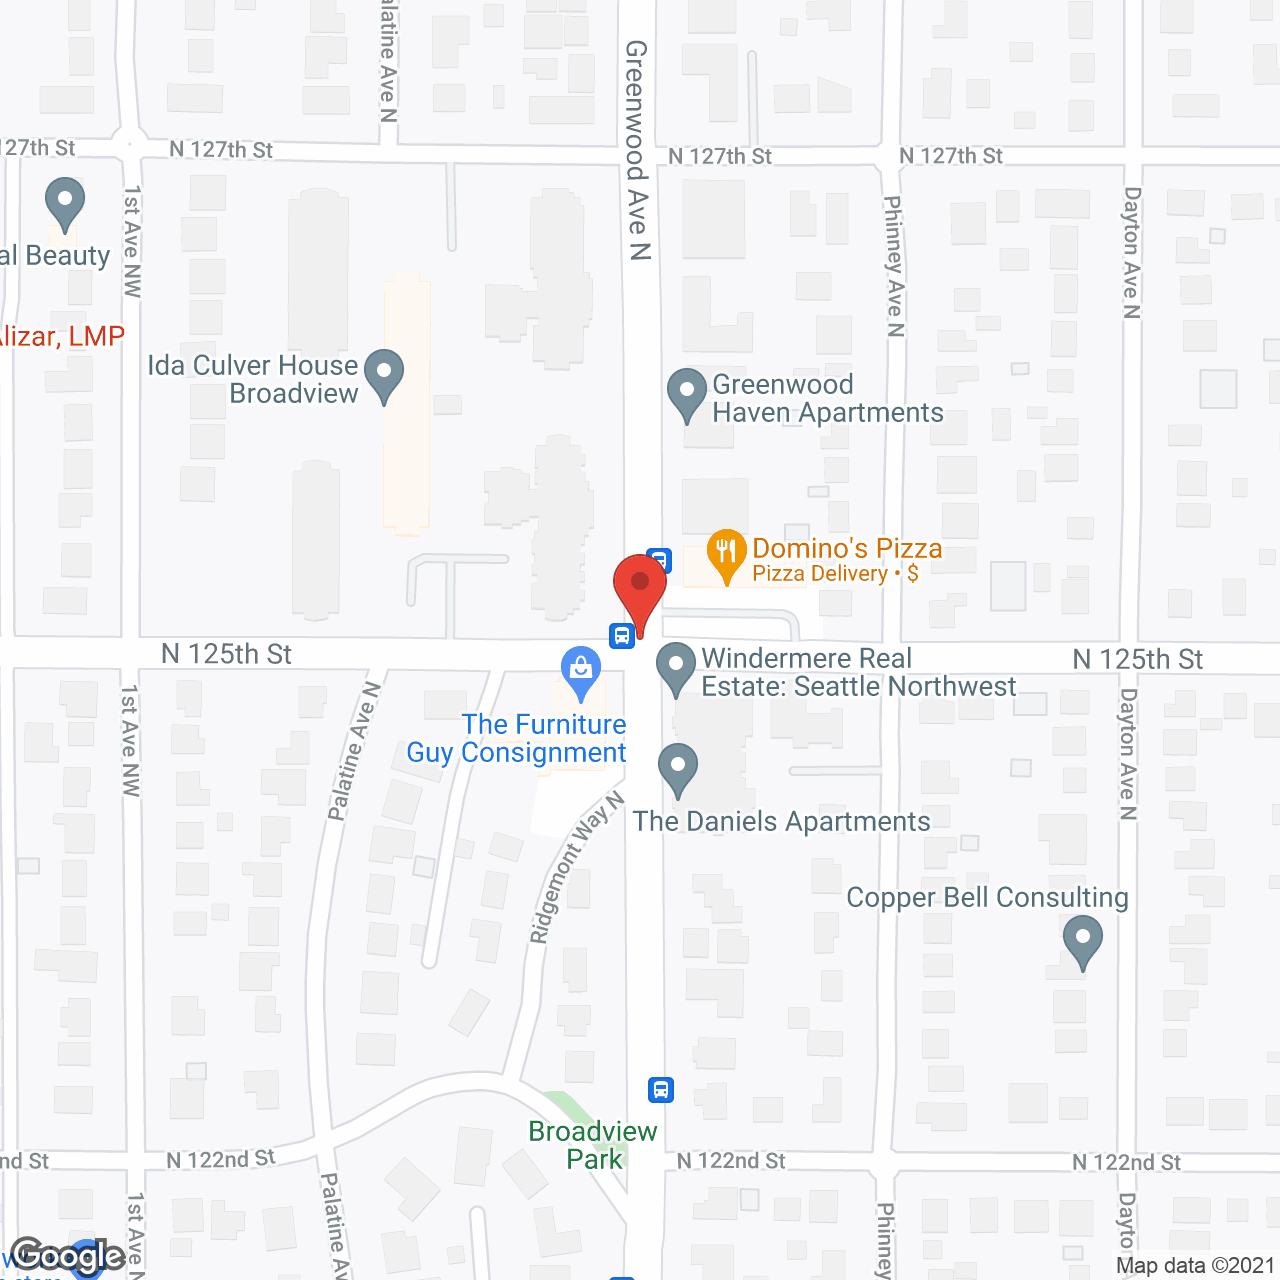 Ida Culver House Broadview in google map